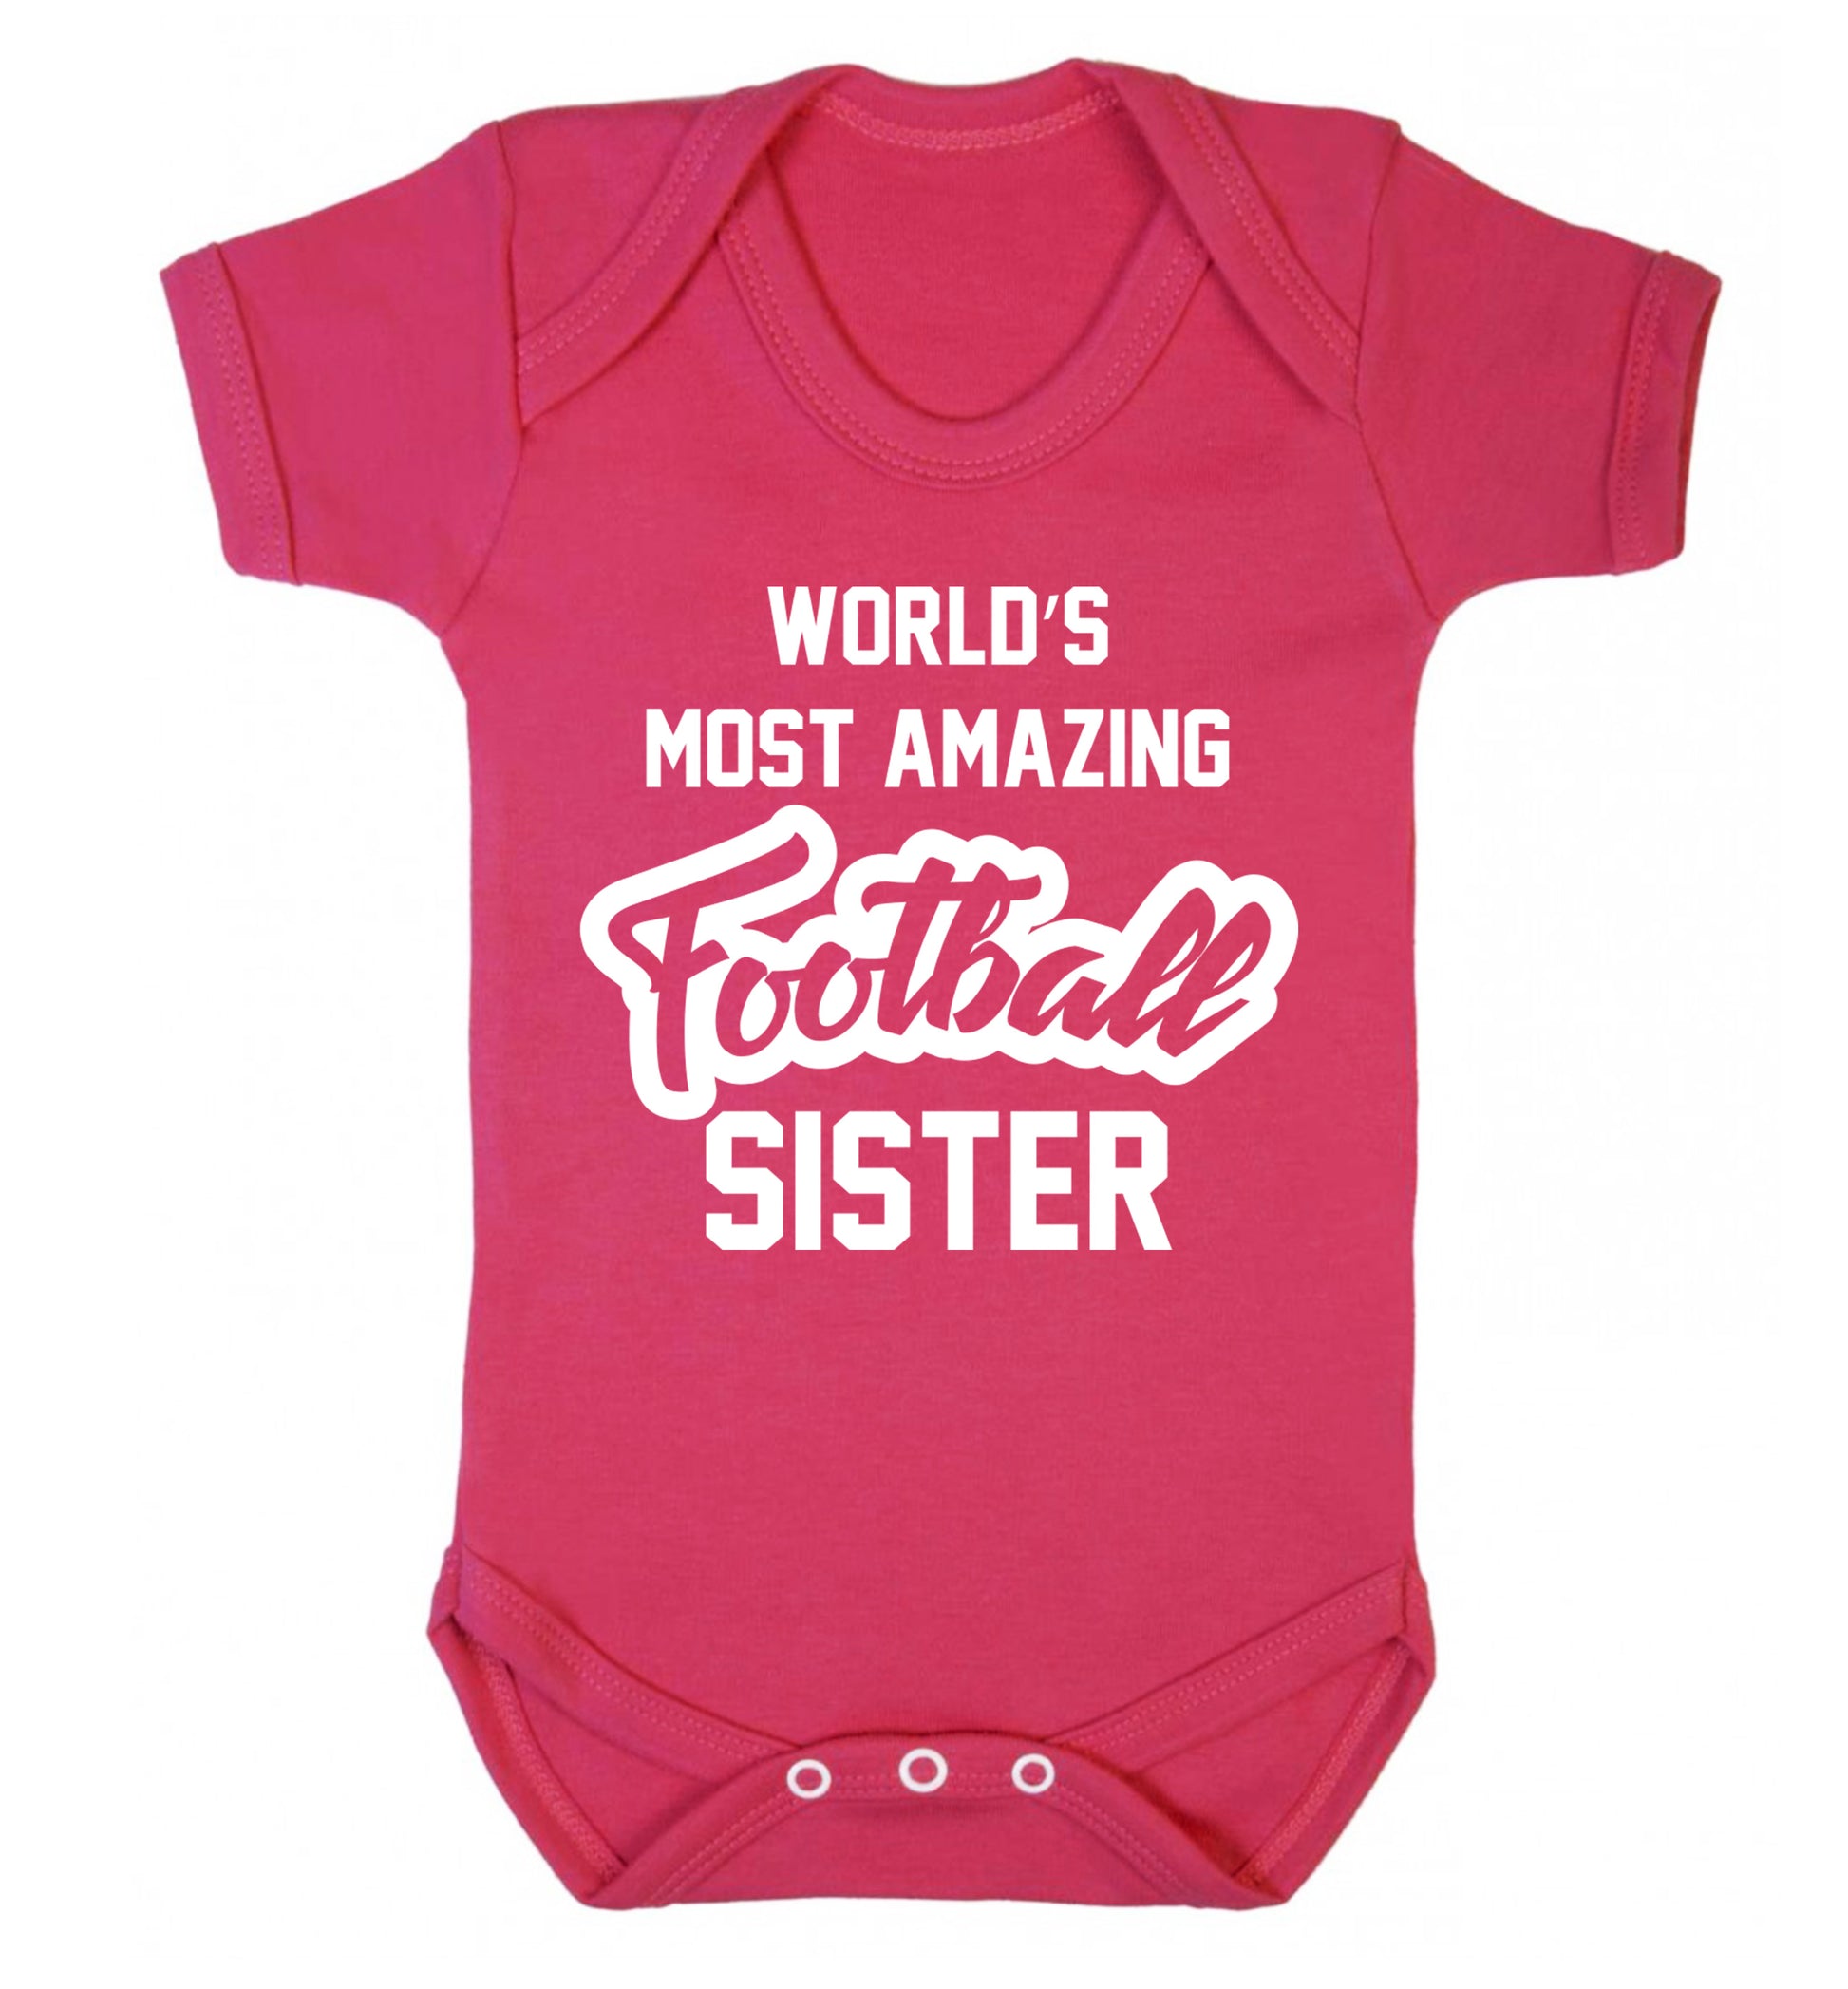 Worlds most amazing football sister Baby Vest dark pink 18-24 months